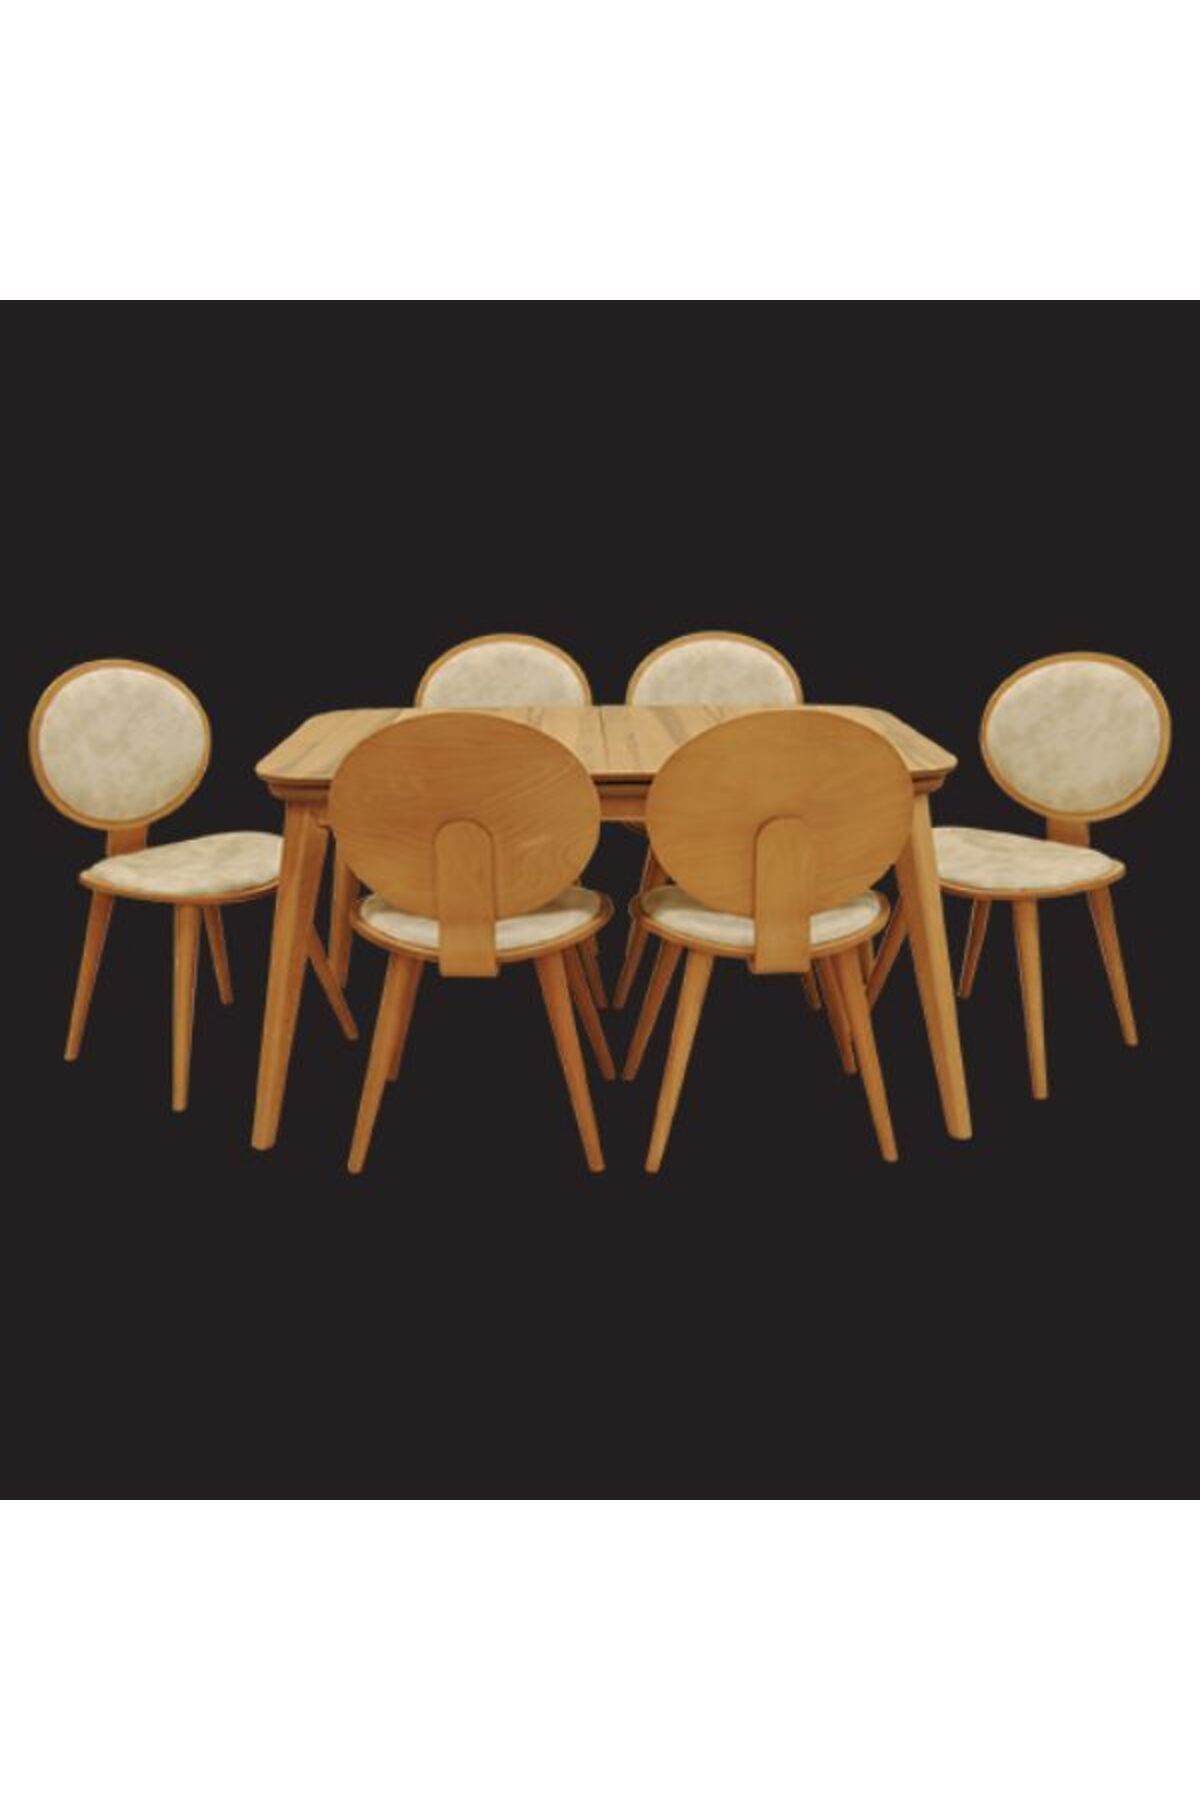 BENGİ TİCARET Masa-papel St Oval Sırt Klasik Sandalye Model Takım Kayın Kaplam Torna Retro Açıl